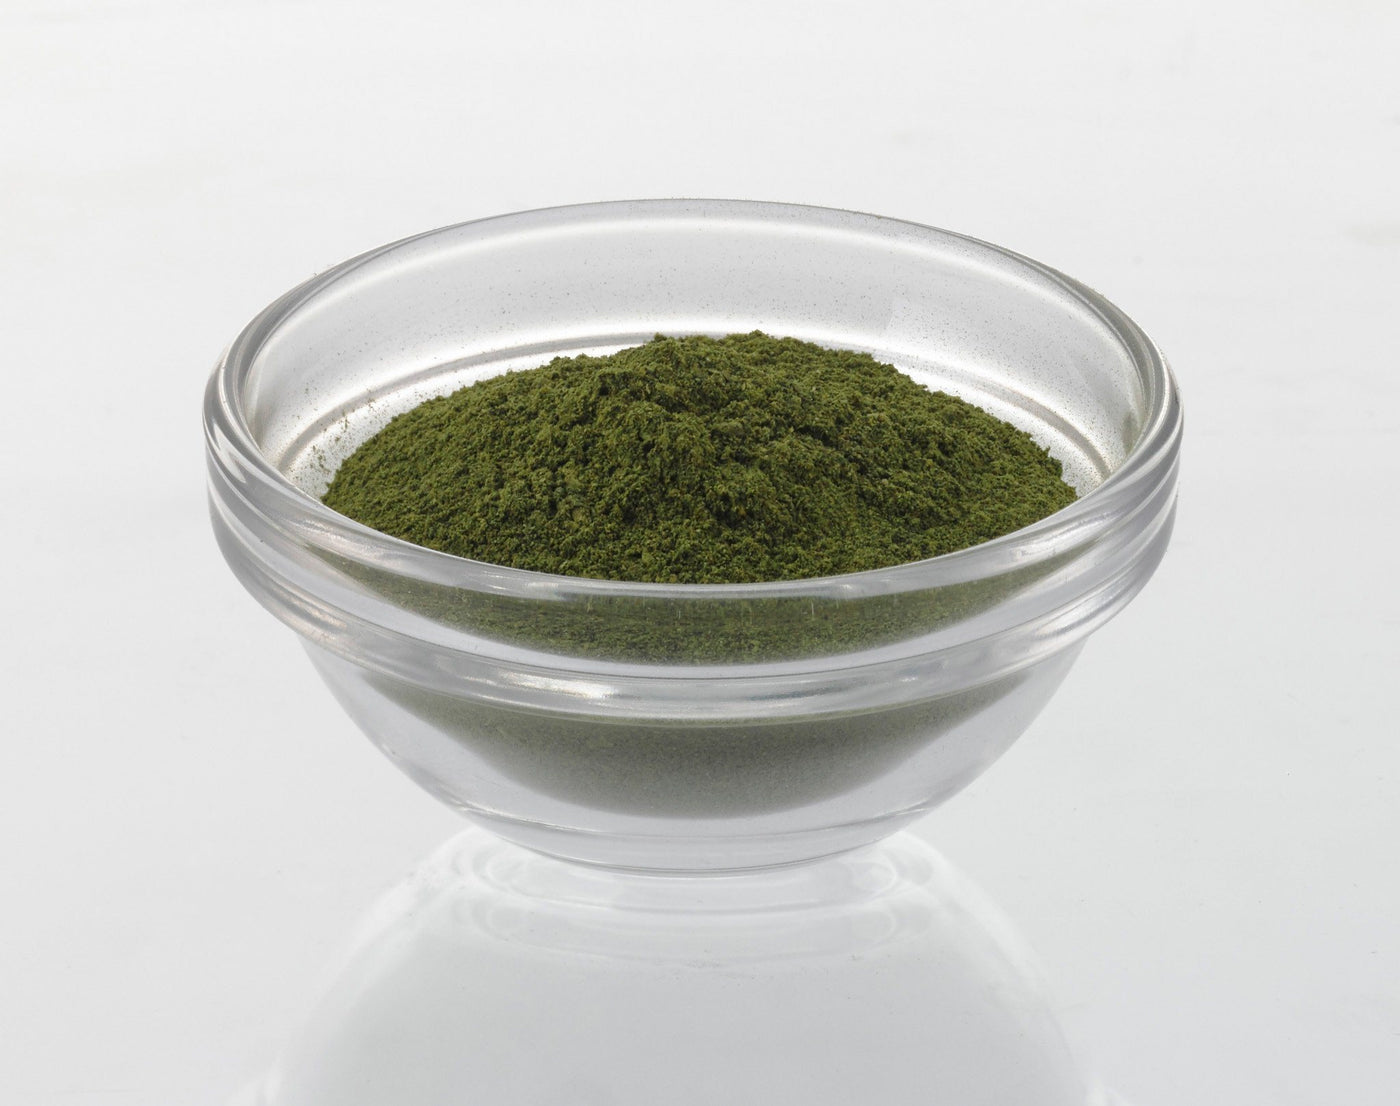 Low-Oxalate Greens Powder, Organic (by Dr. Cowan's Garden)